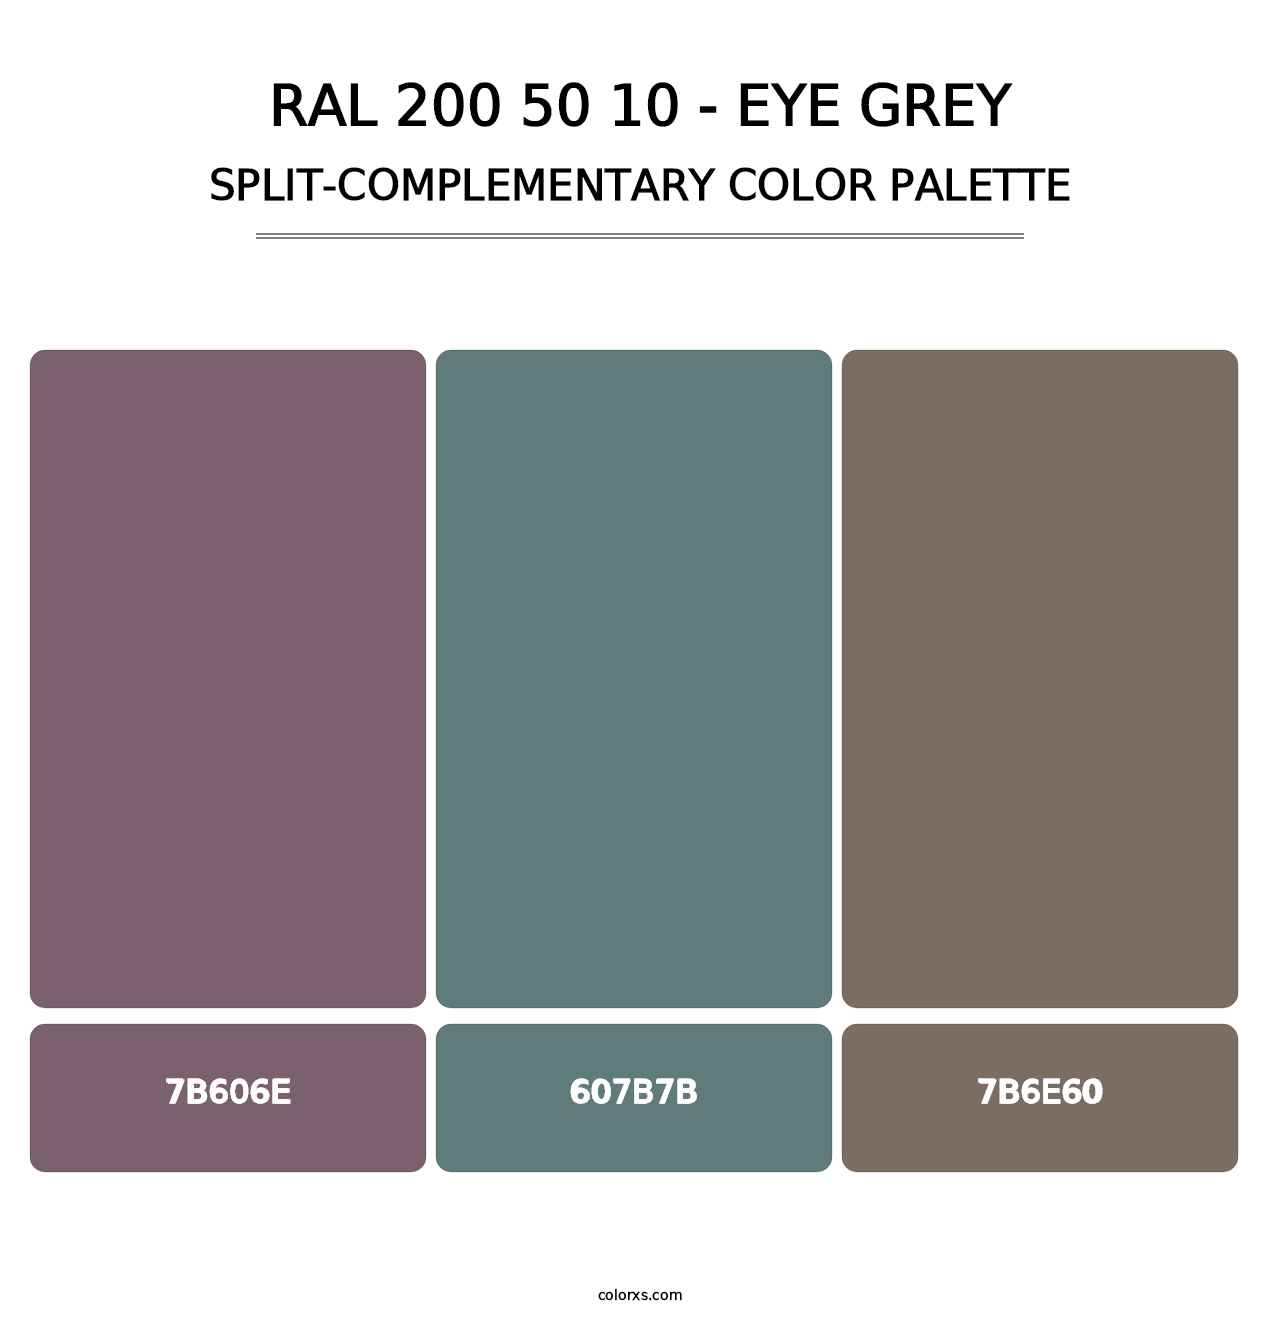 RAL 200 50 10 - Eye Grey - Split-Complementary Color Palette